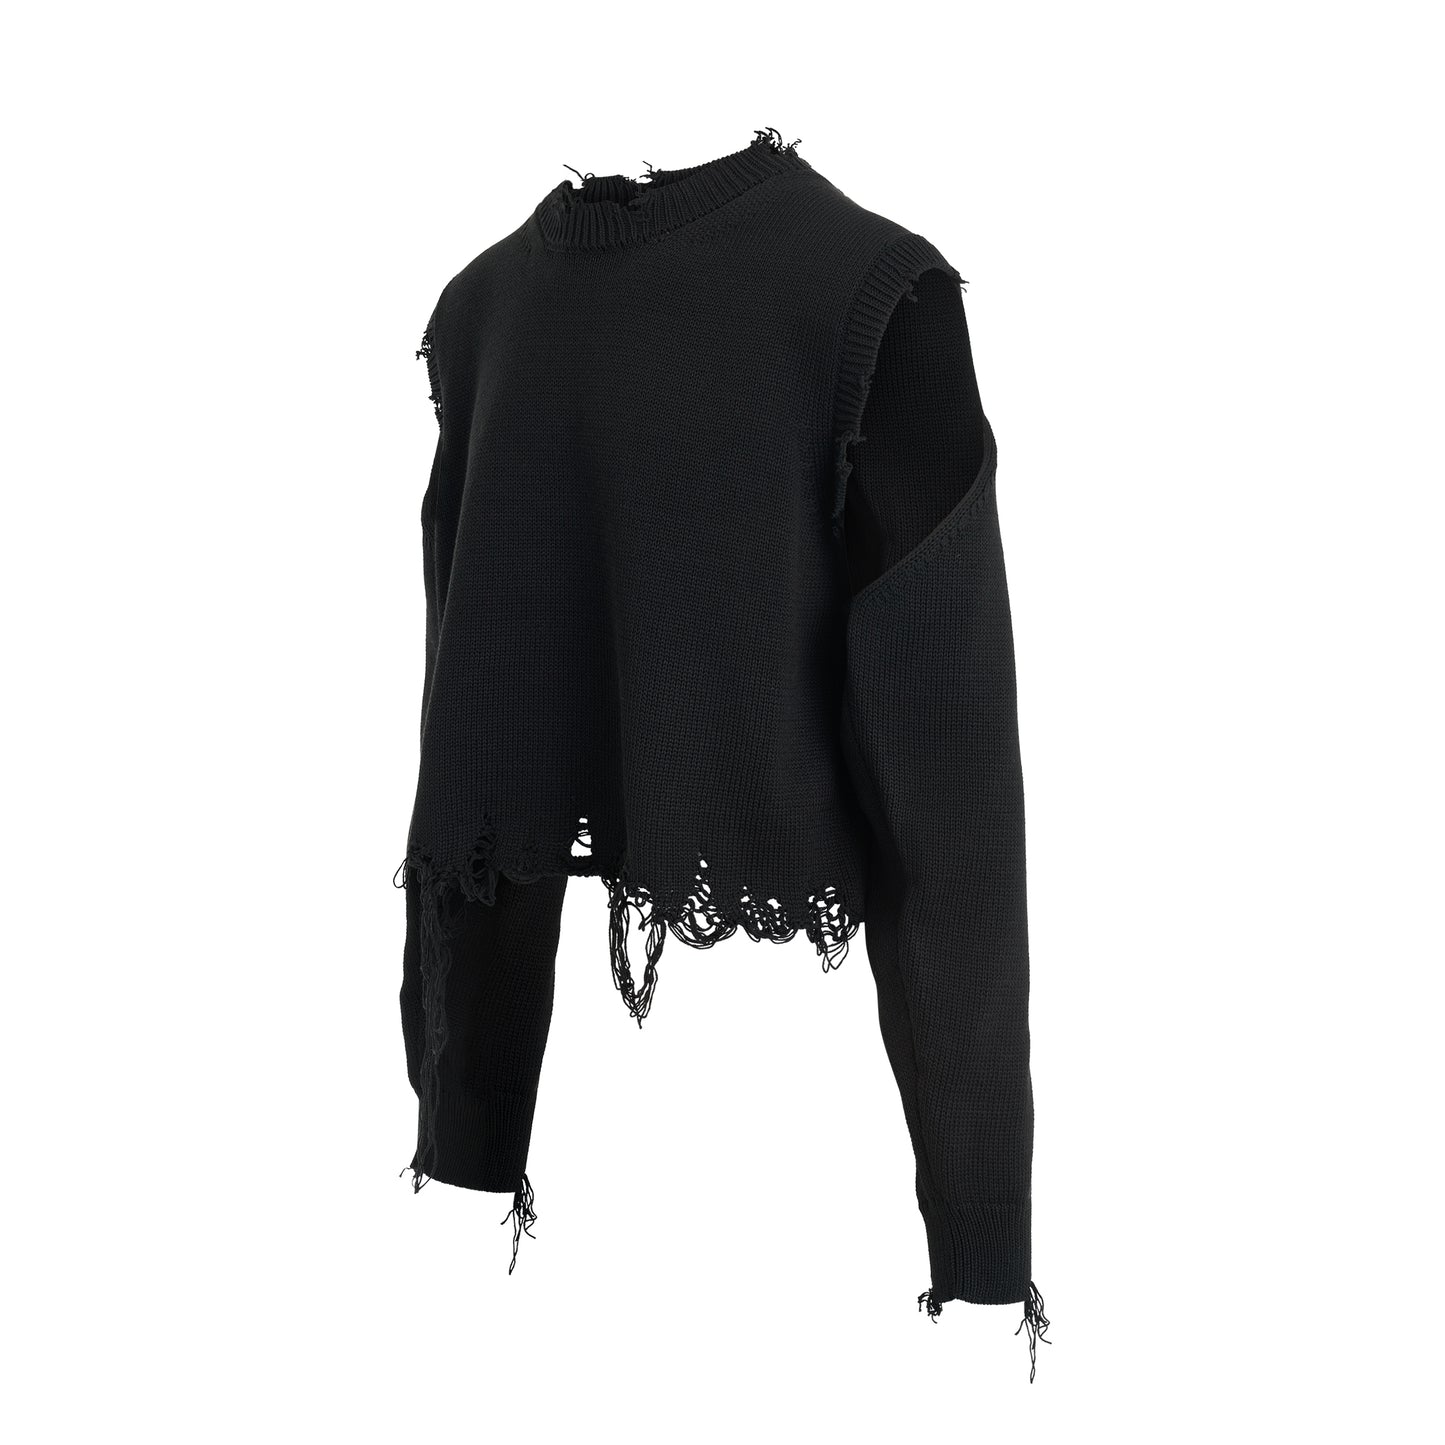 2Way Sleeve Sweater in Black